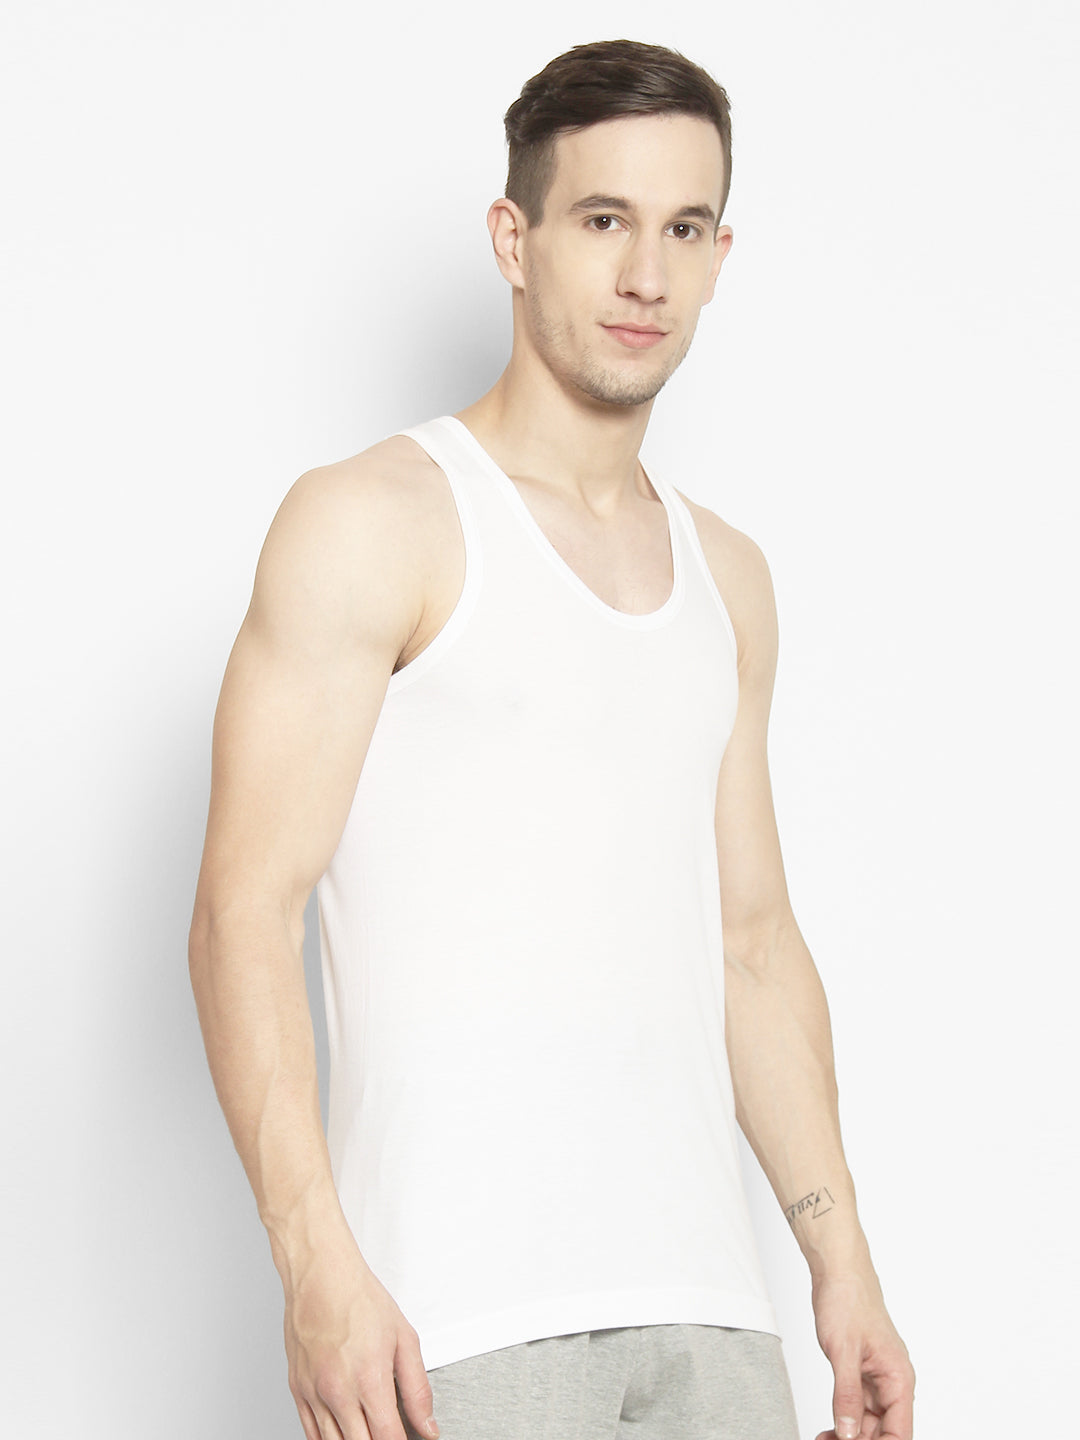 Men's Neva Koolin White Round Neck Sleeveless Sandow Vest - Cotton, Extra Soft, Creating Koolin Effect for Comfort - Ideal for Summer, Gym, and Everyday Wear- Pack of 6 Pcs